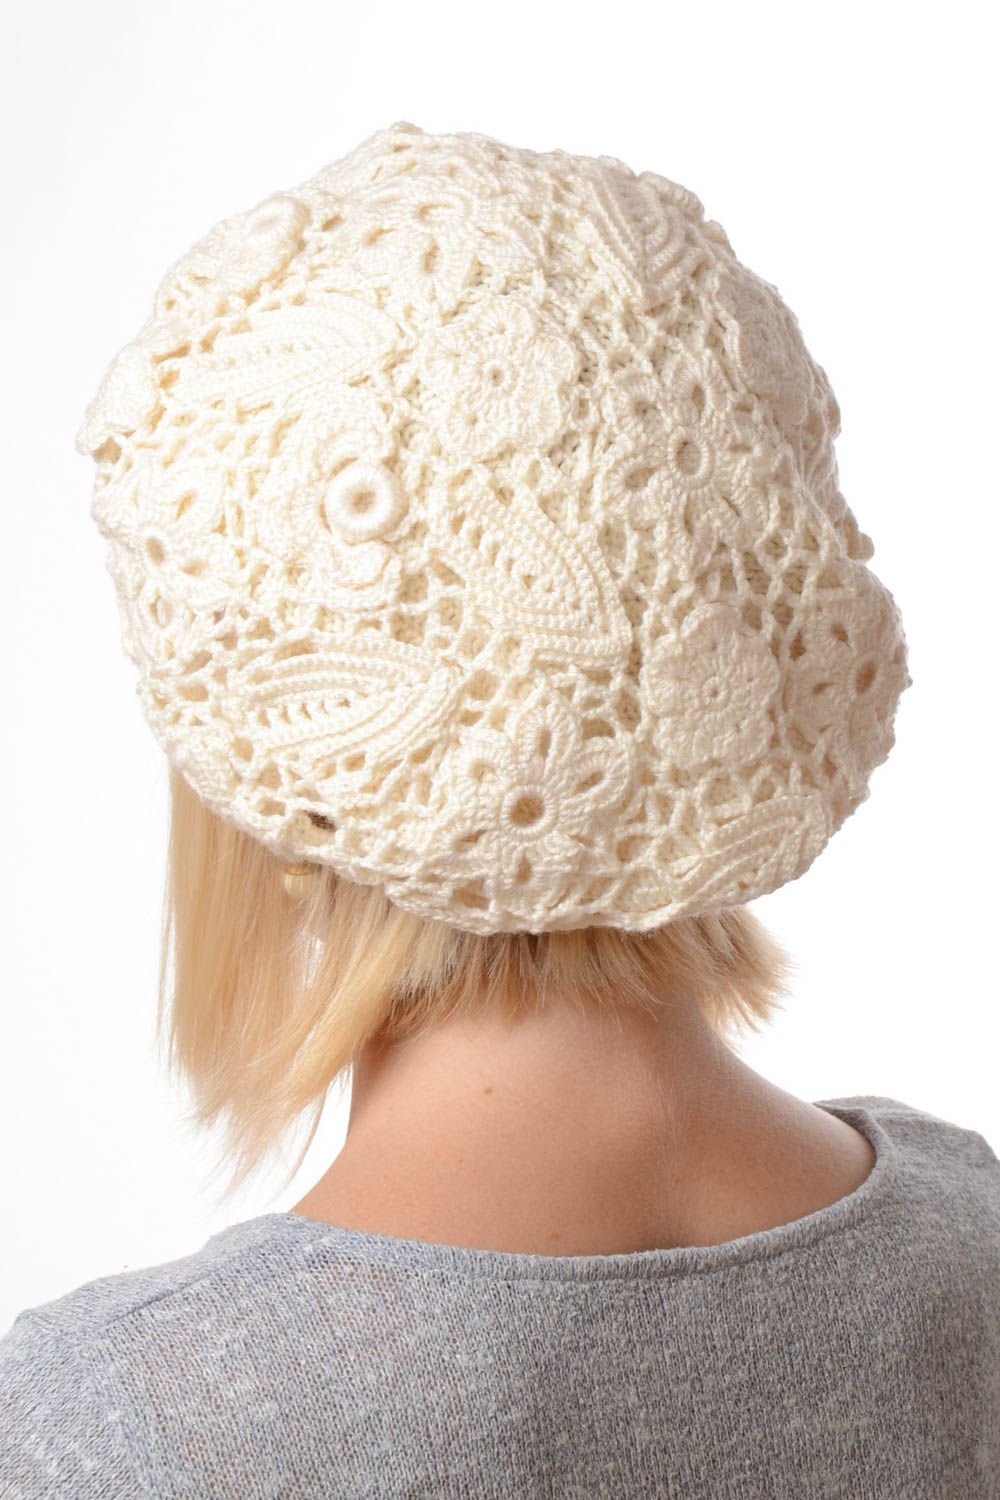 Handmade hat knitted hat designer hat unusual gift hat for women warm hat photo 2